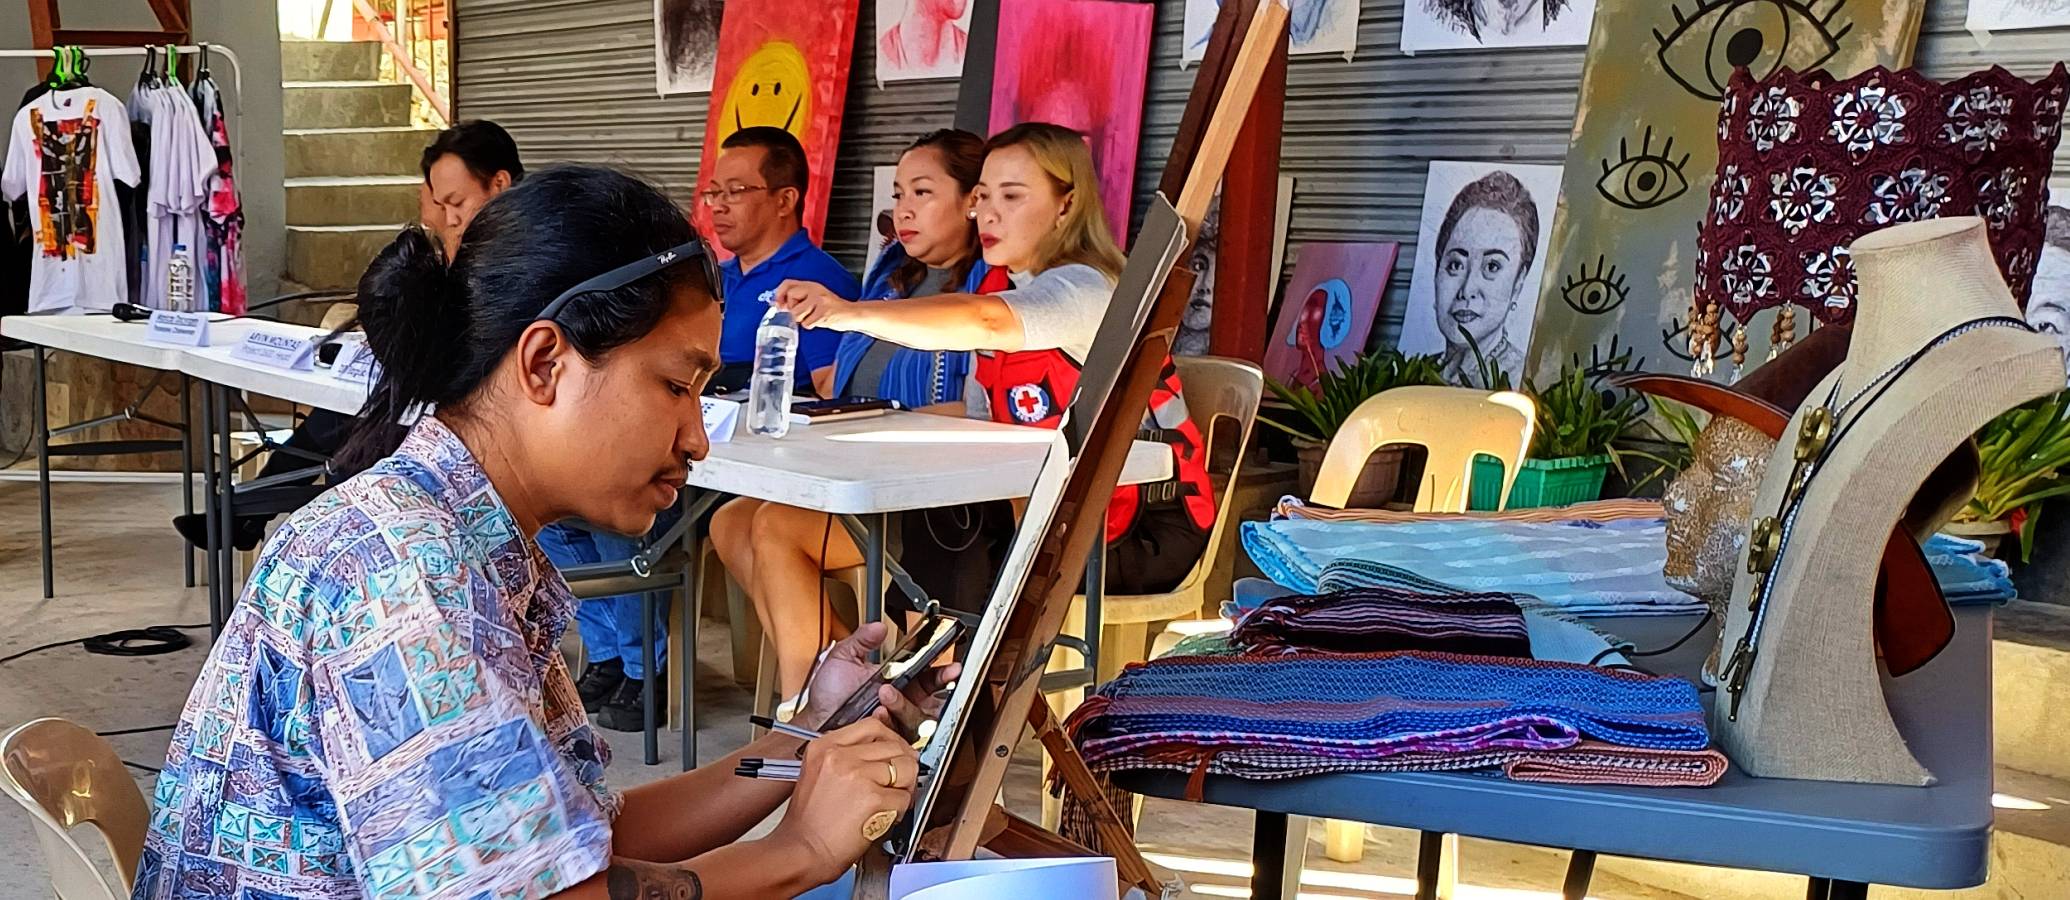 Baguio’s neighborhood streets turn into creative markets